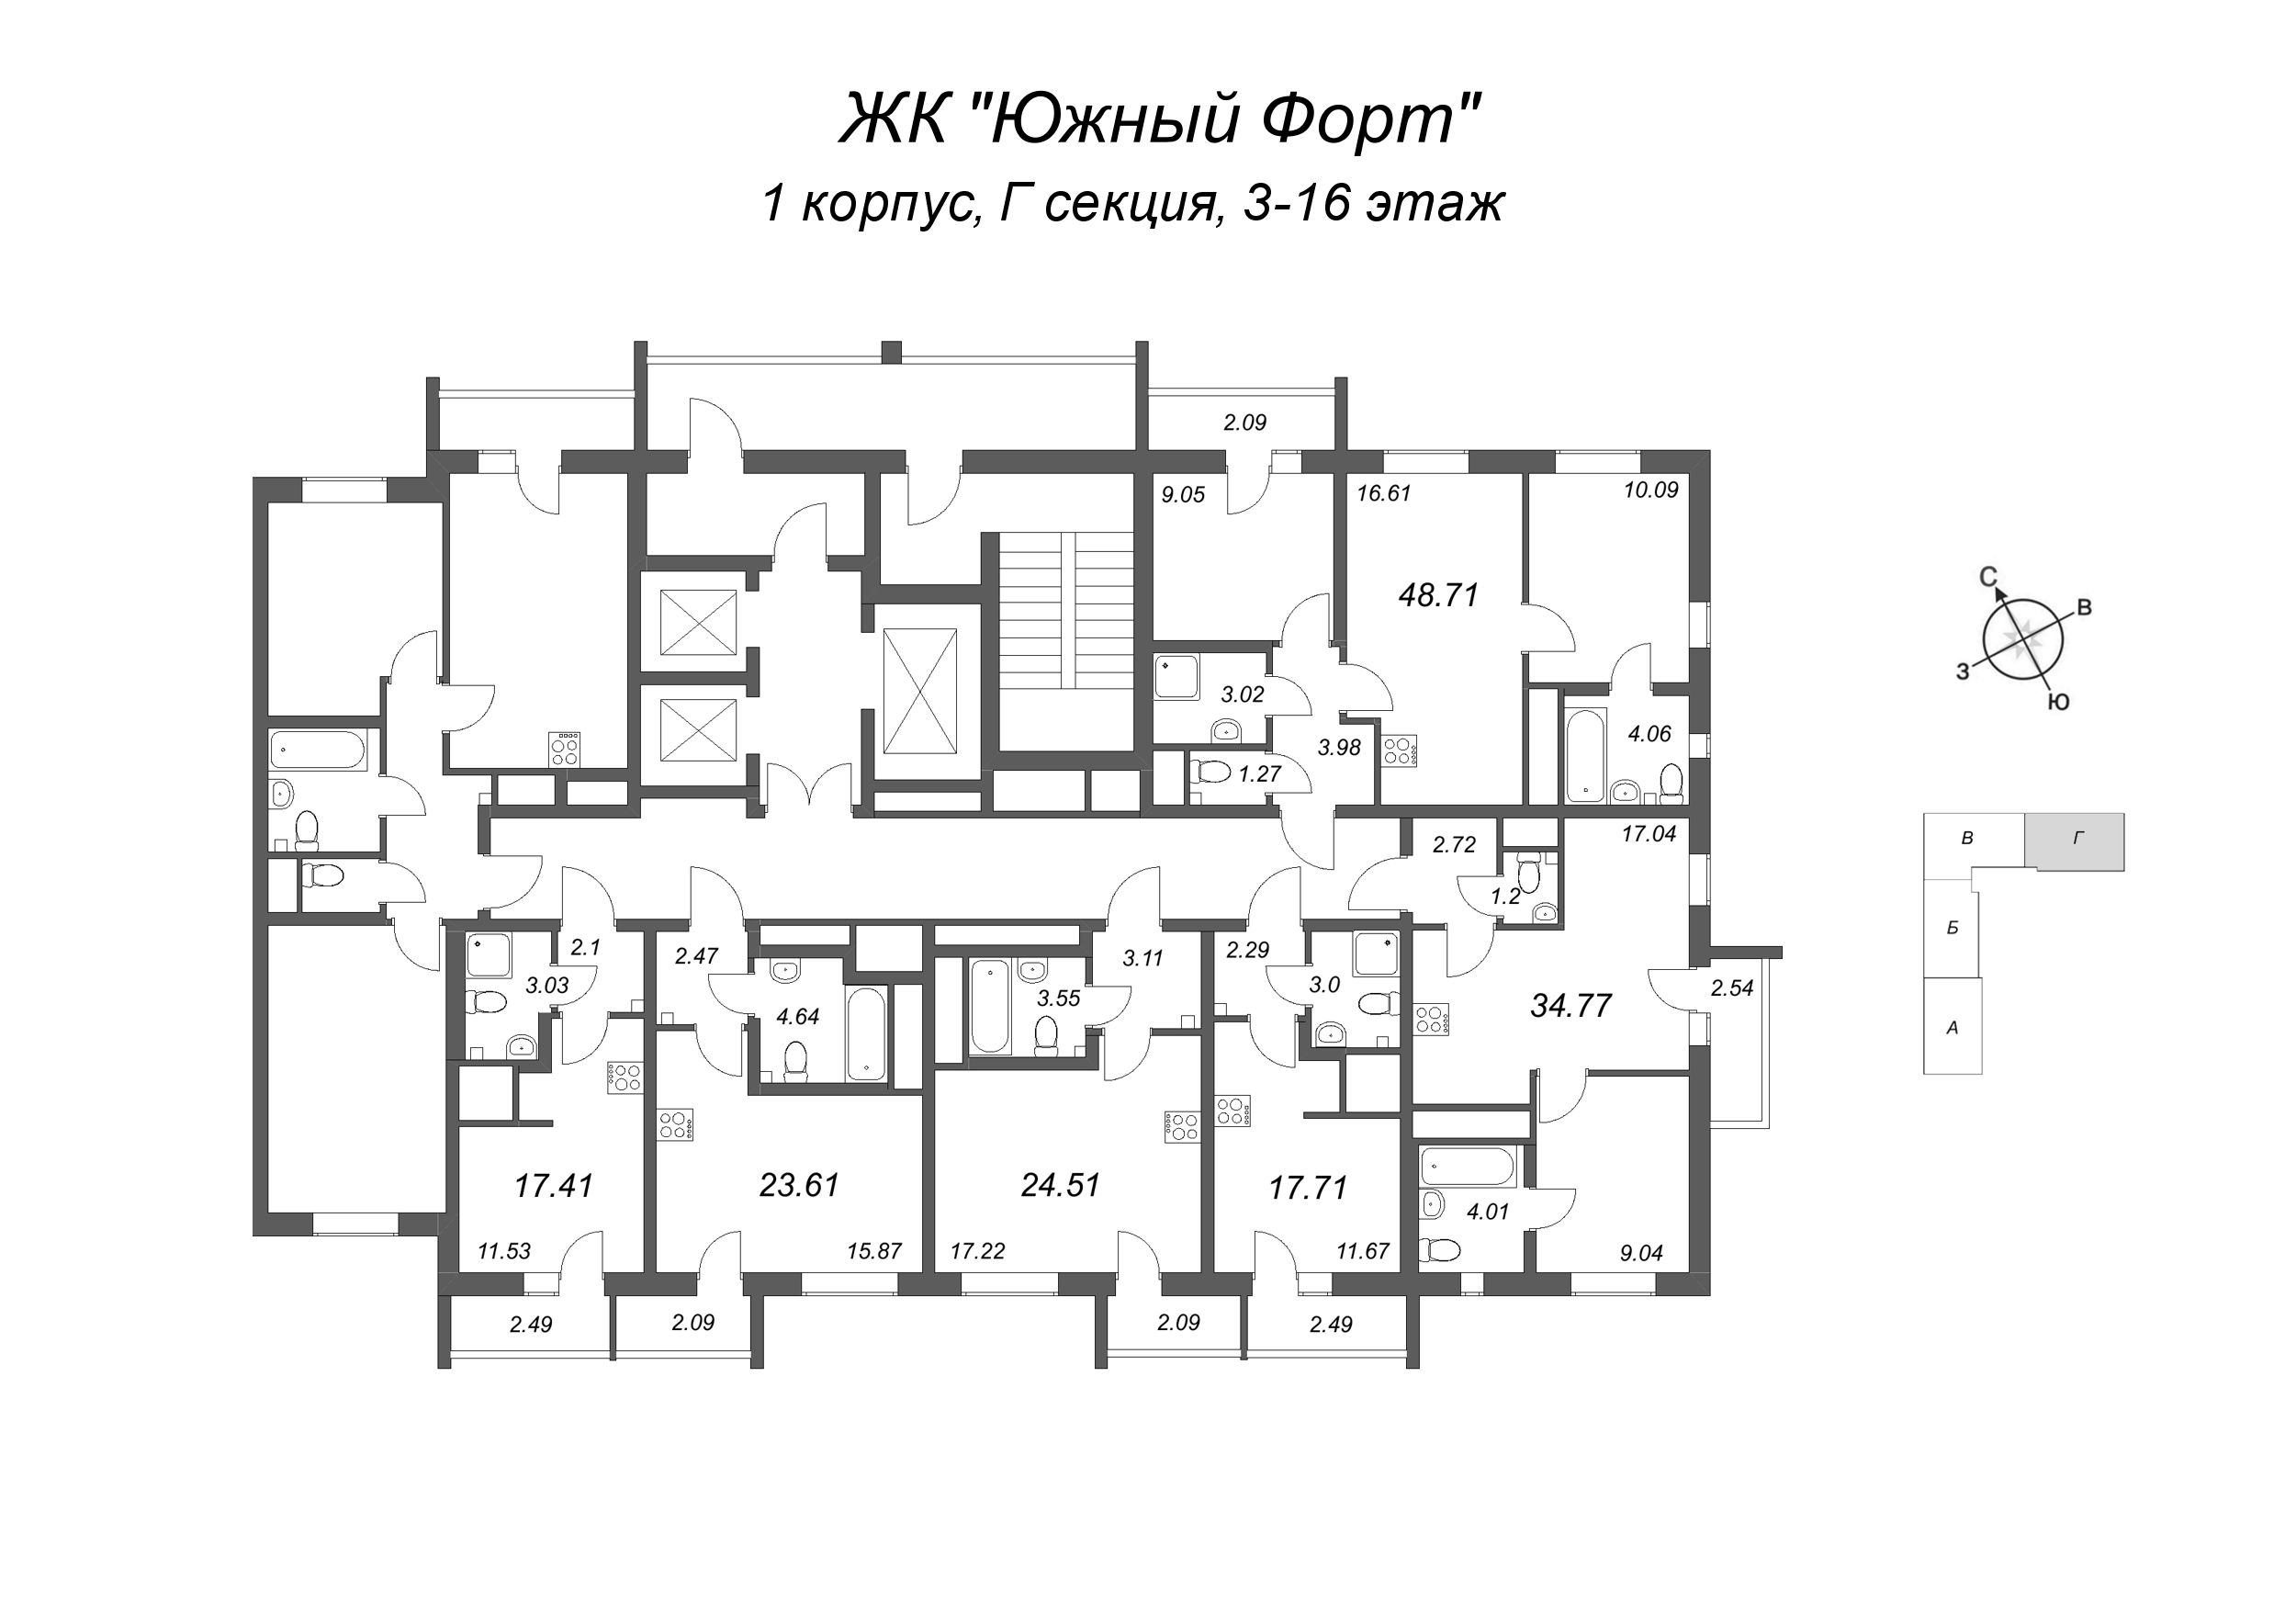 3-комнатная (Евро) квартира, 48.71 м² - планировка этажа